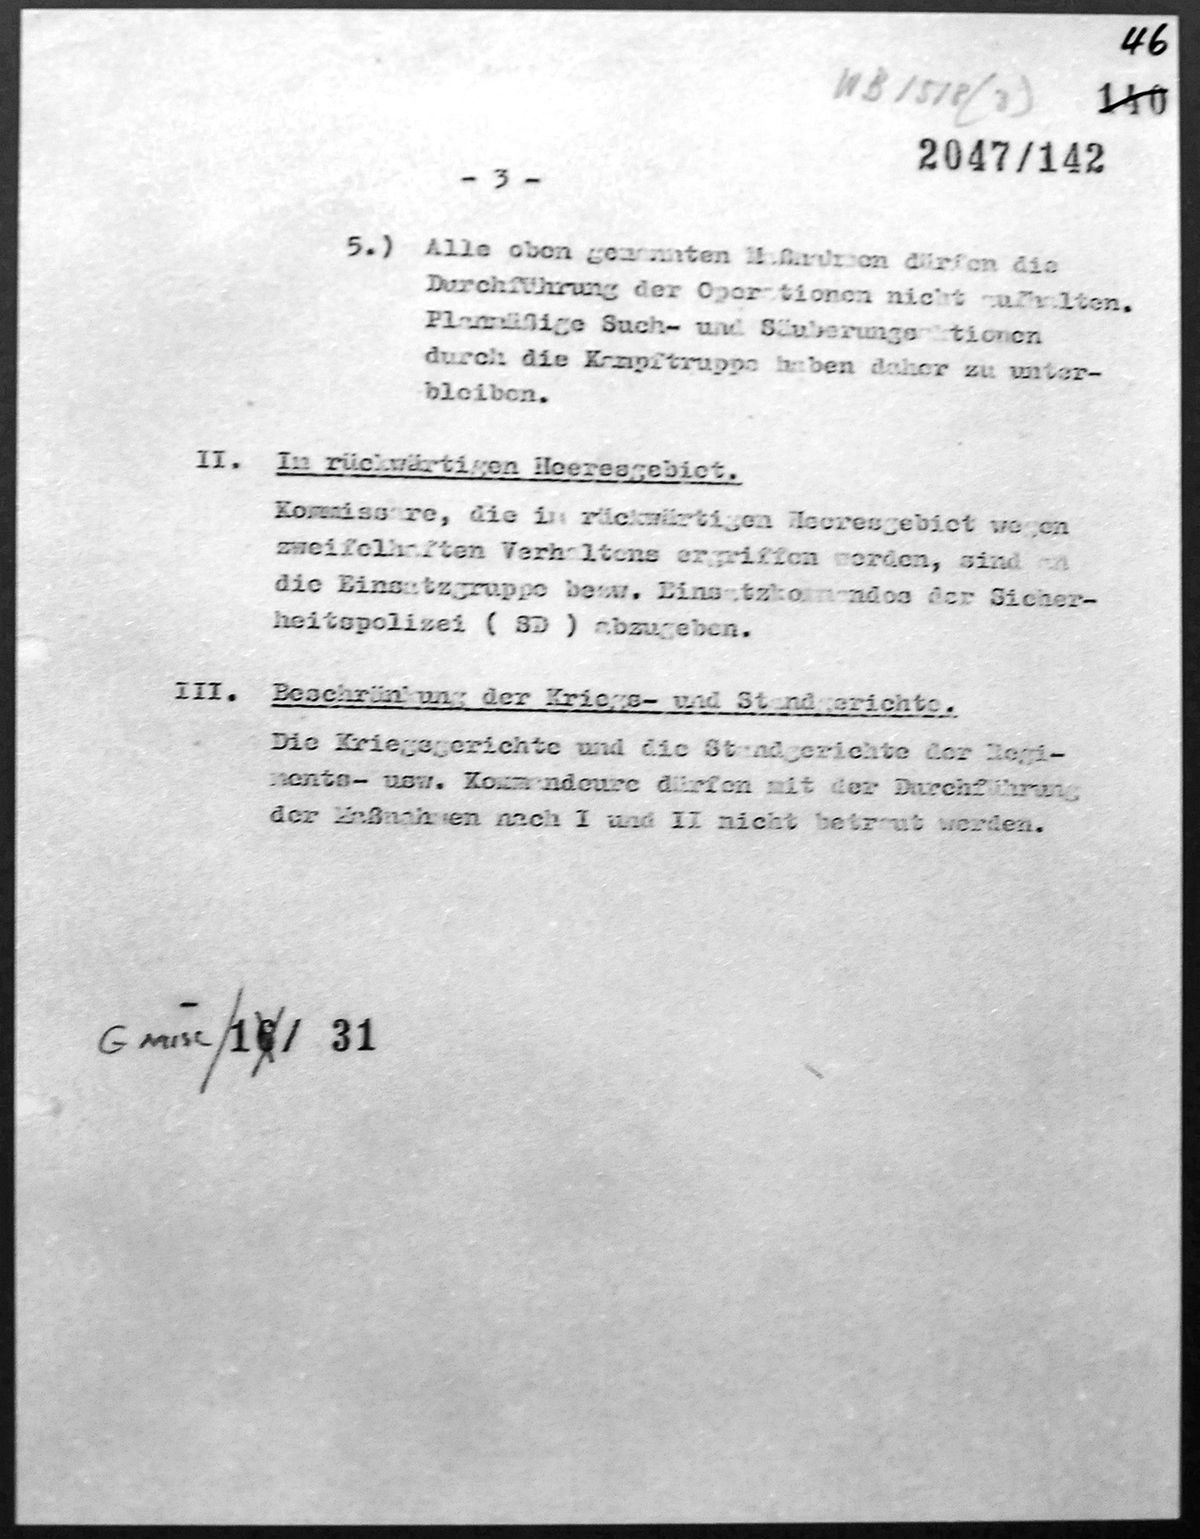 File 12 10 13 Dokument Kongreszhalle Nuernberg By Ralfr 130 Jpg